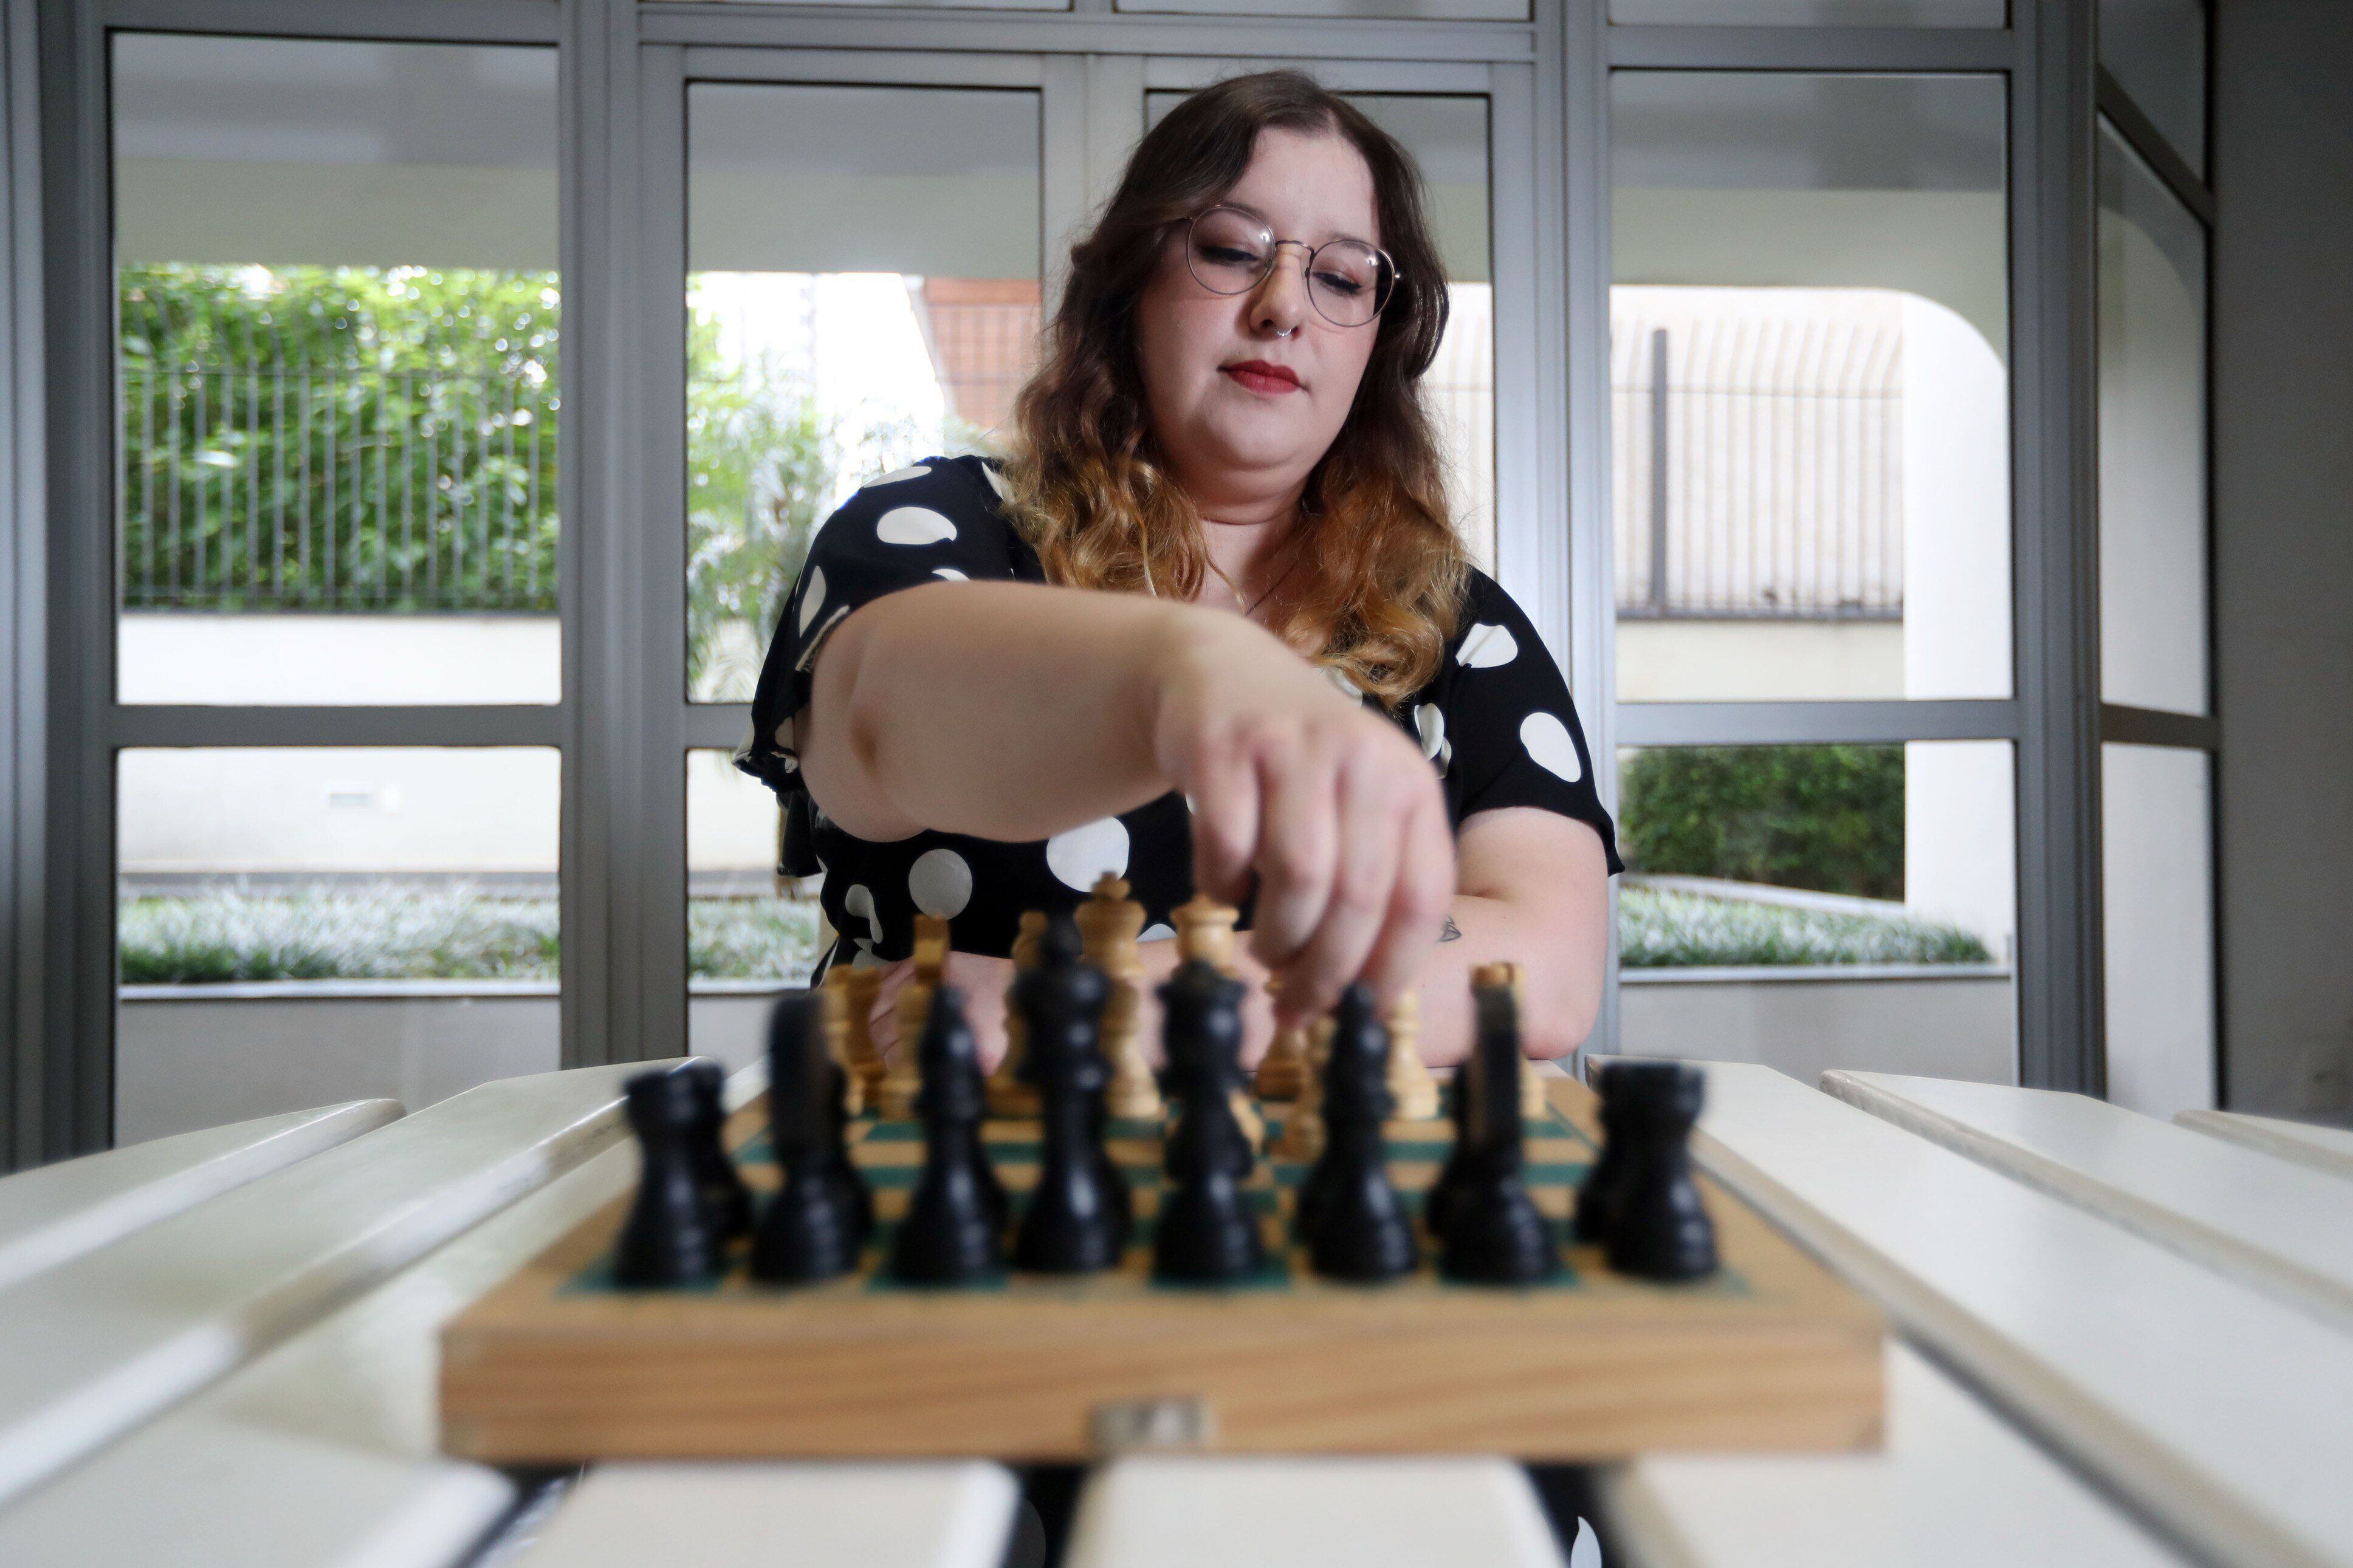 A série O Gambito da Rainha e os impactos no xadrez brasileiro - Torre na  Sétima - tudo sobre xadrez, a arte de Caíssa